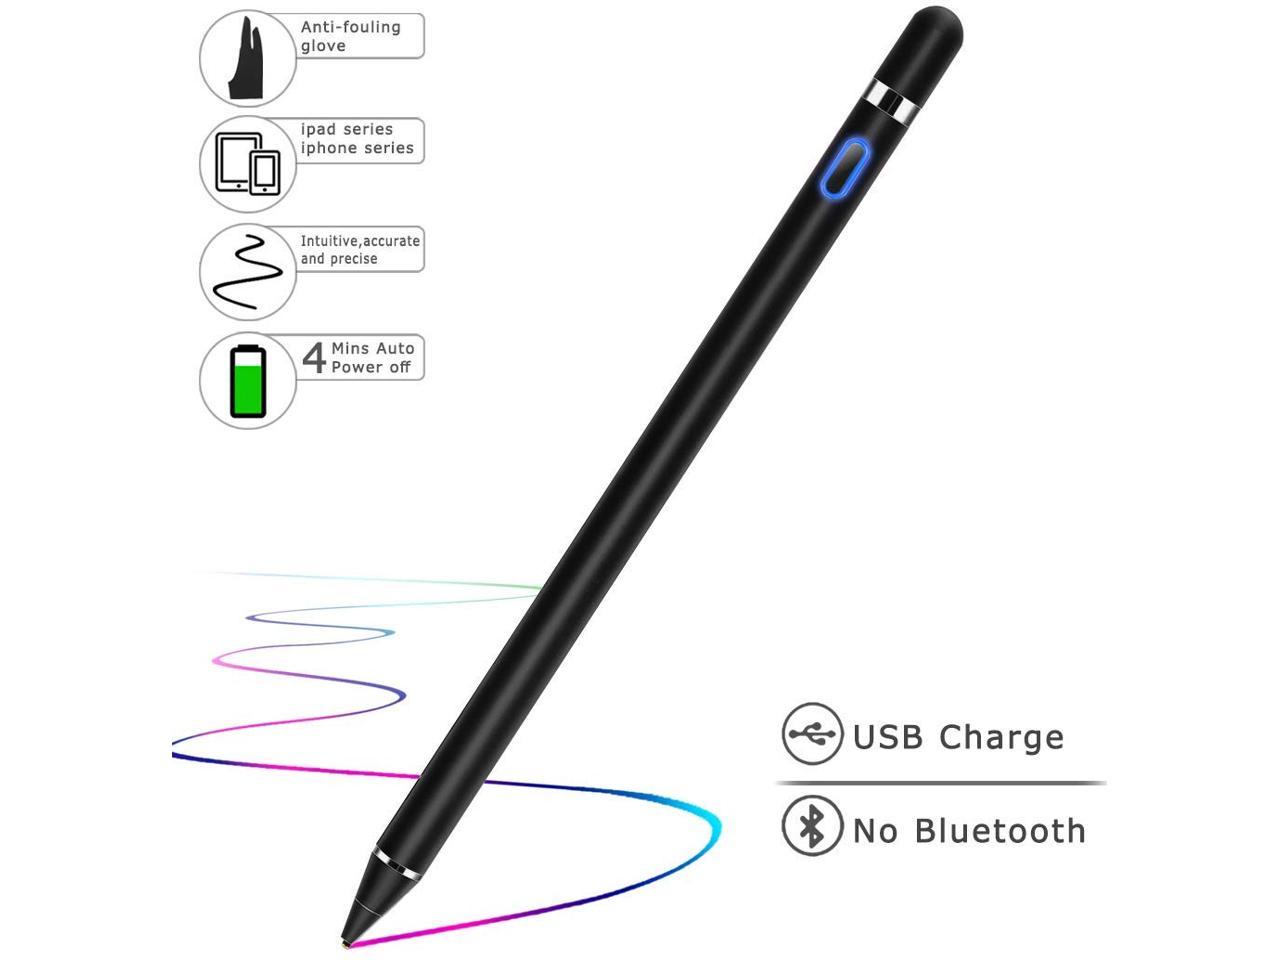 Lunar Blue Stylus Pen for vivo iQOO Neo 5 Super Precise Stylus Pen for vivo iQOO Neo 5 - FineTouch Capacitive Stylus Stylus Pen by BoxWave